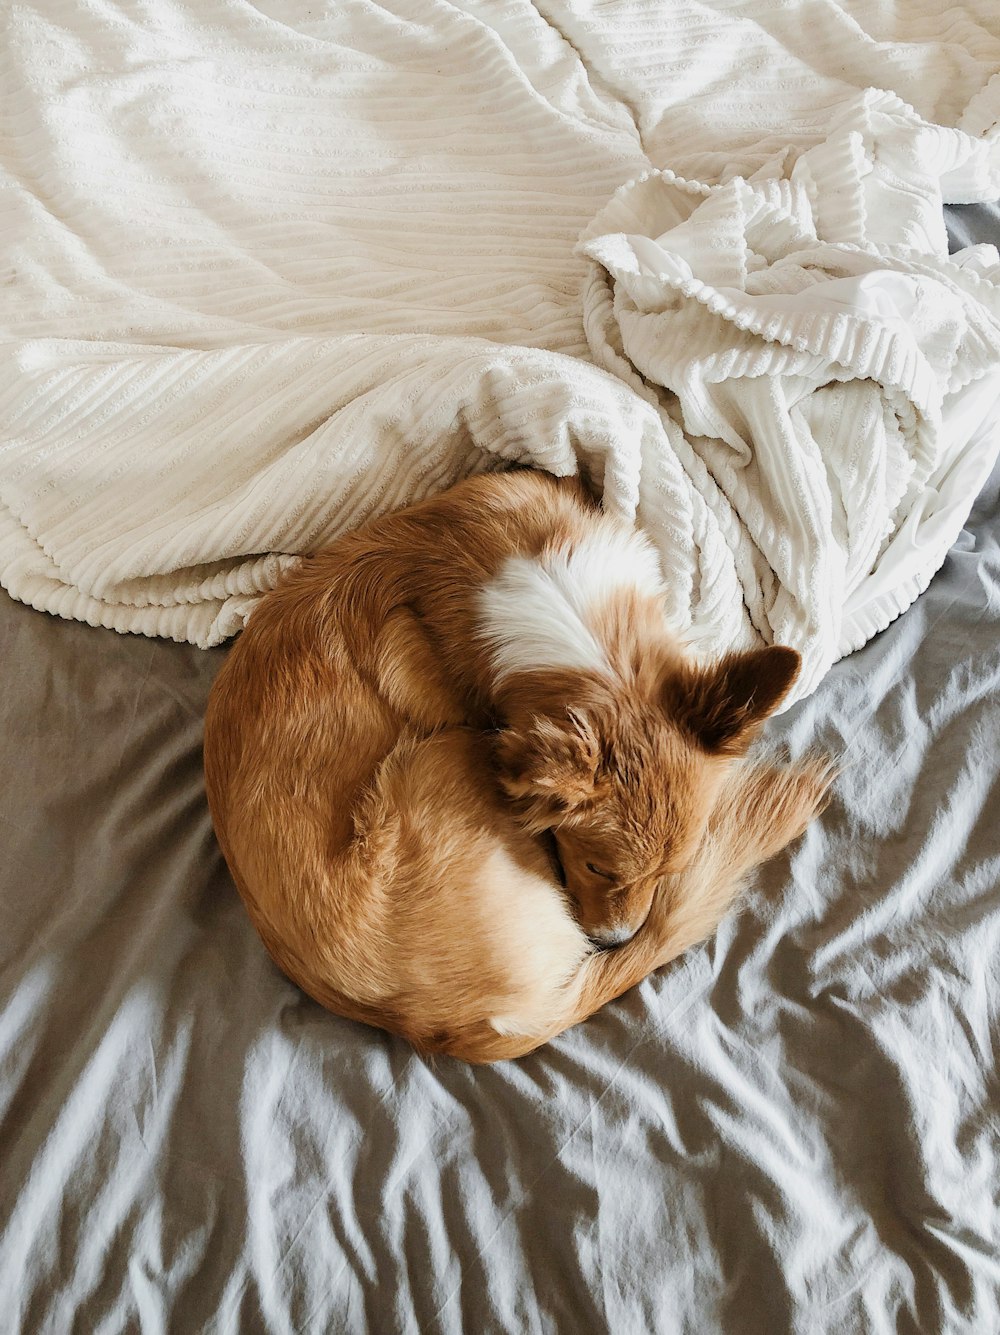 brown and white short coated medium sized dog lying on white bed